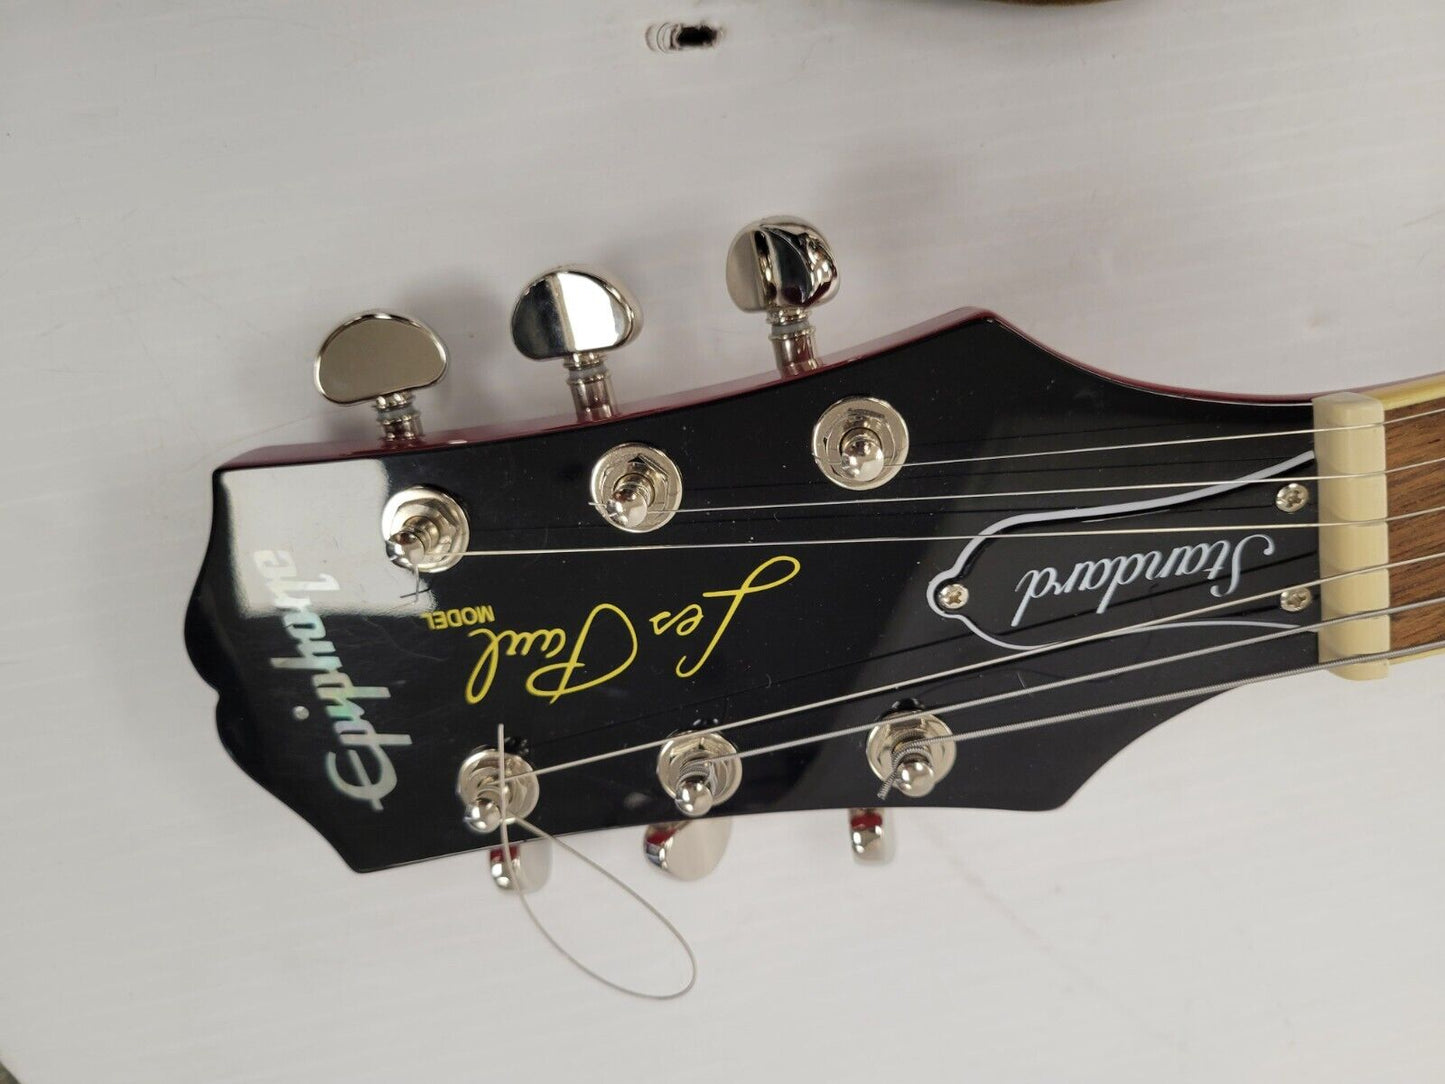 (I-34817) Epiphone Les Paul Standard Guitar